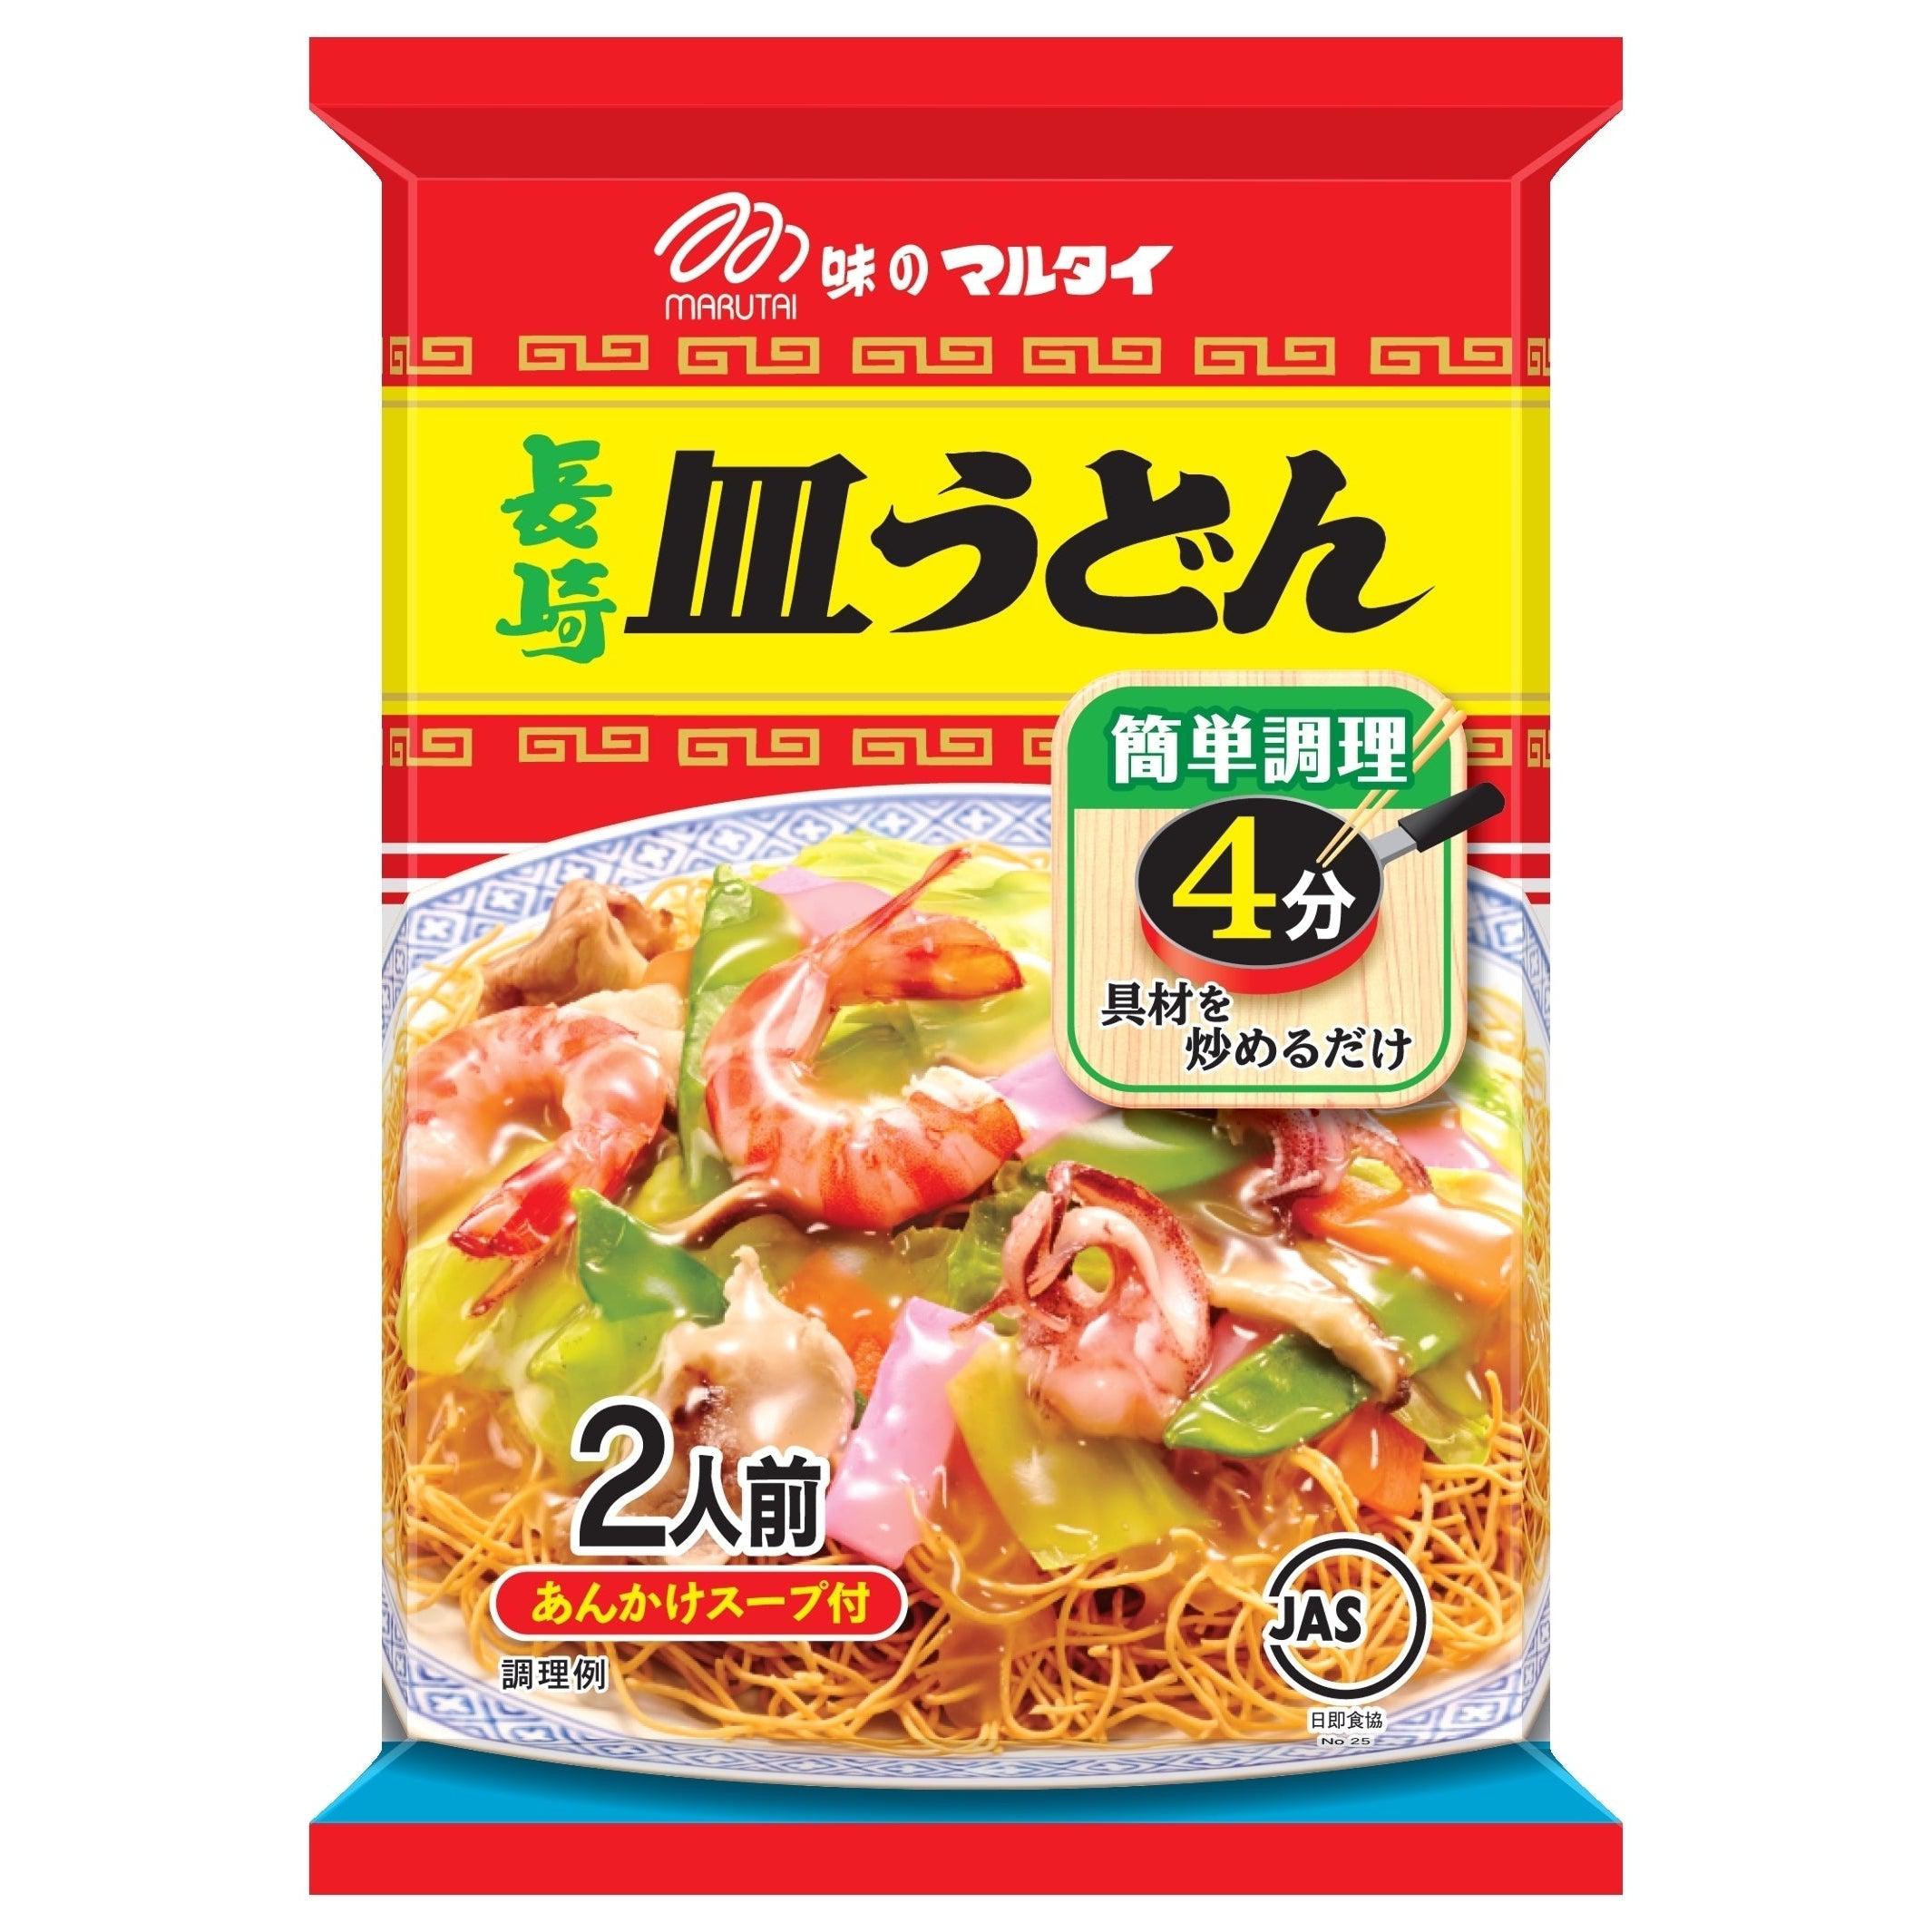 Marutai Nagasaki Sara Udon Instant Crispy Noodles 140g (Pack of 3), Japanese Taste